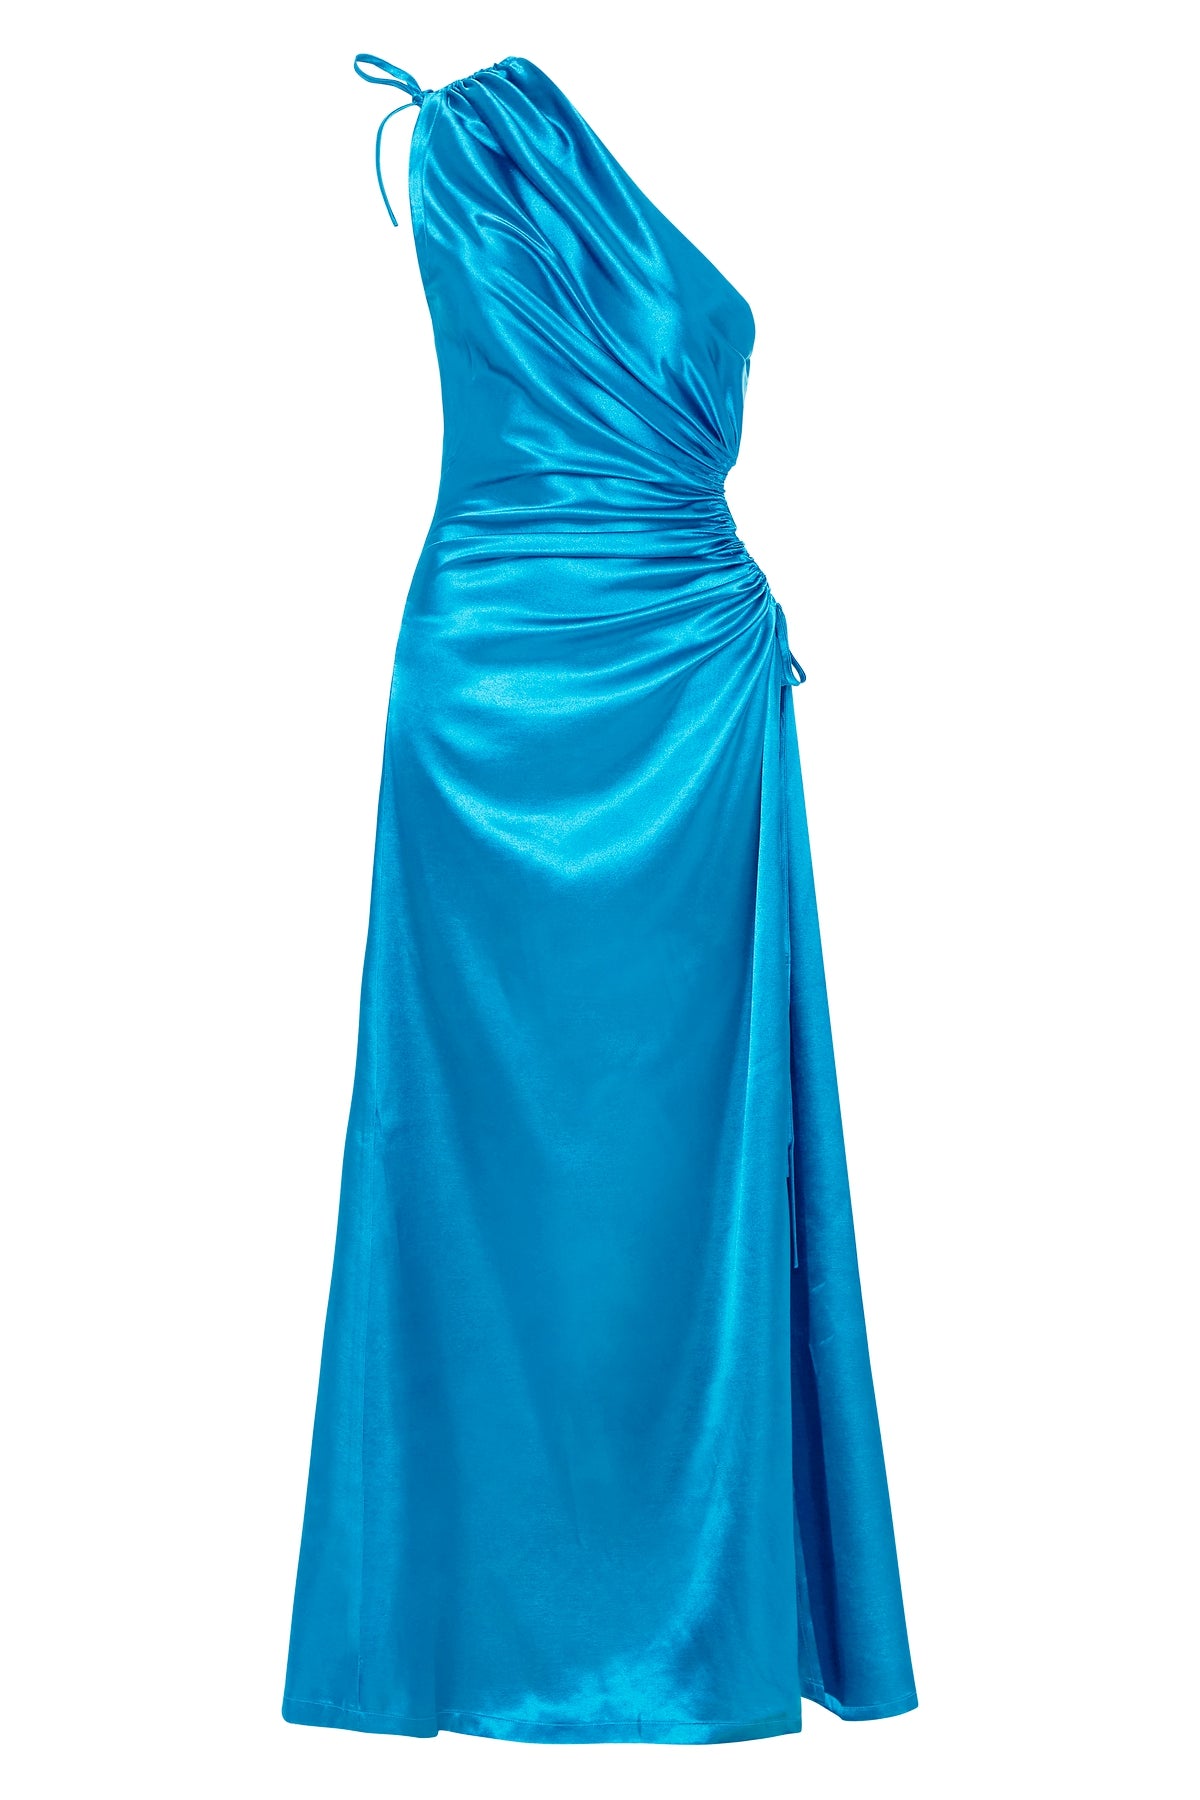 Rent or Hire, Nour Paisley Floral Dress - Blue Floral Sonya